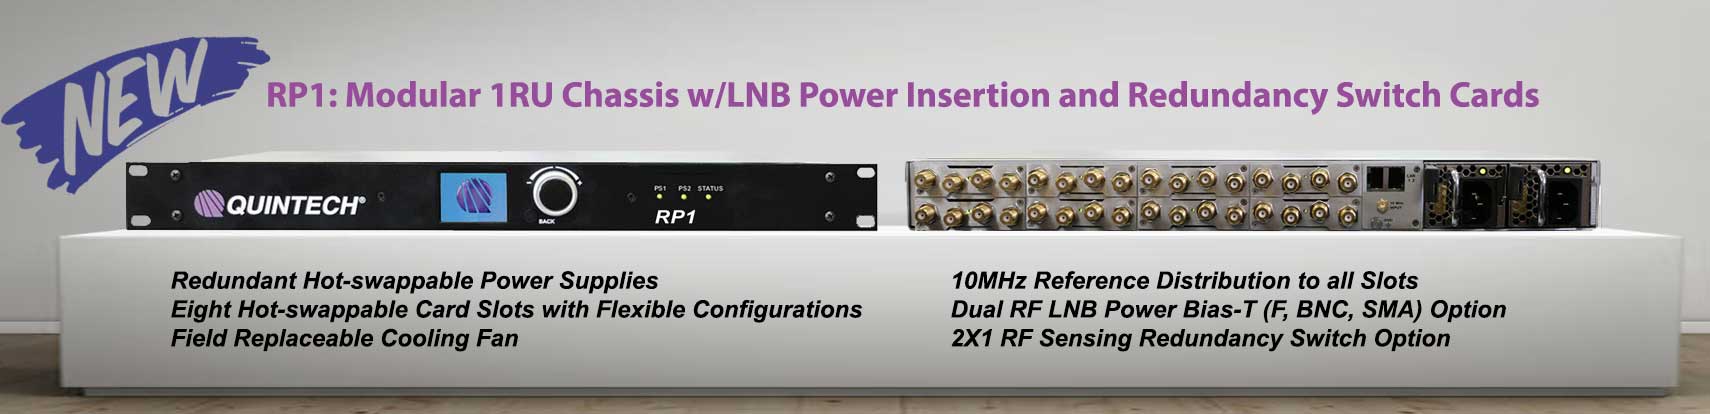 Modular 1RU LNB Power Insertion & Redundancy Switch